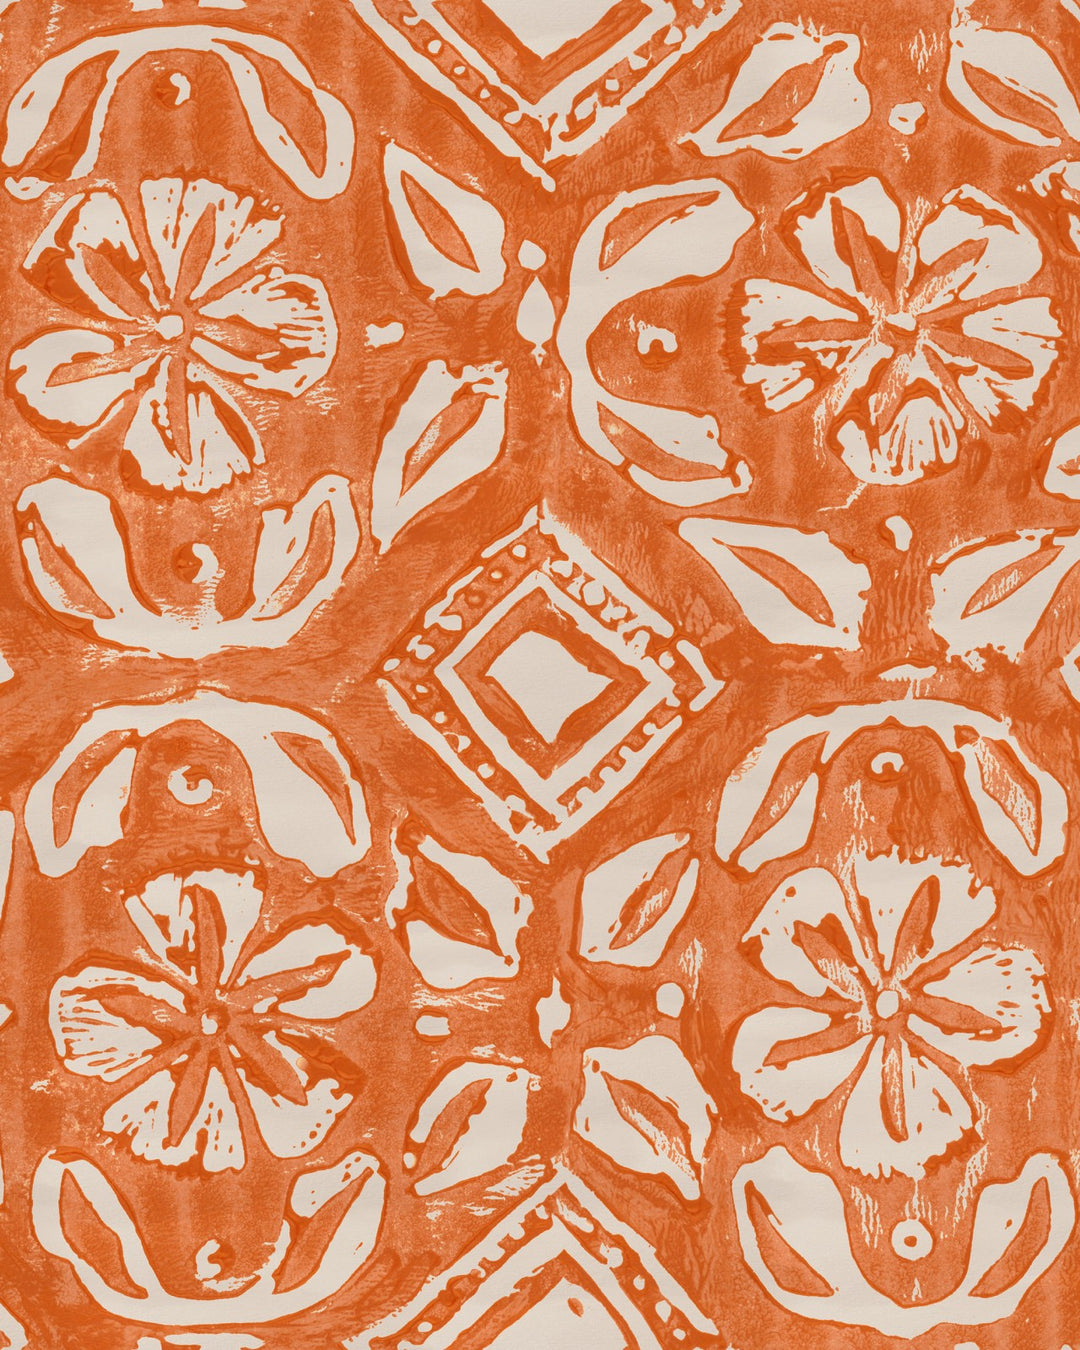 minnie-kemp-chimney-cake-wallpaper-block-print-design-clementine